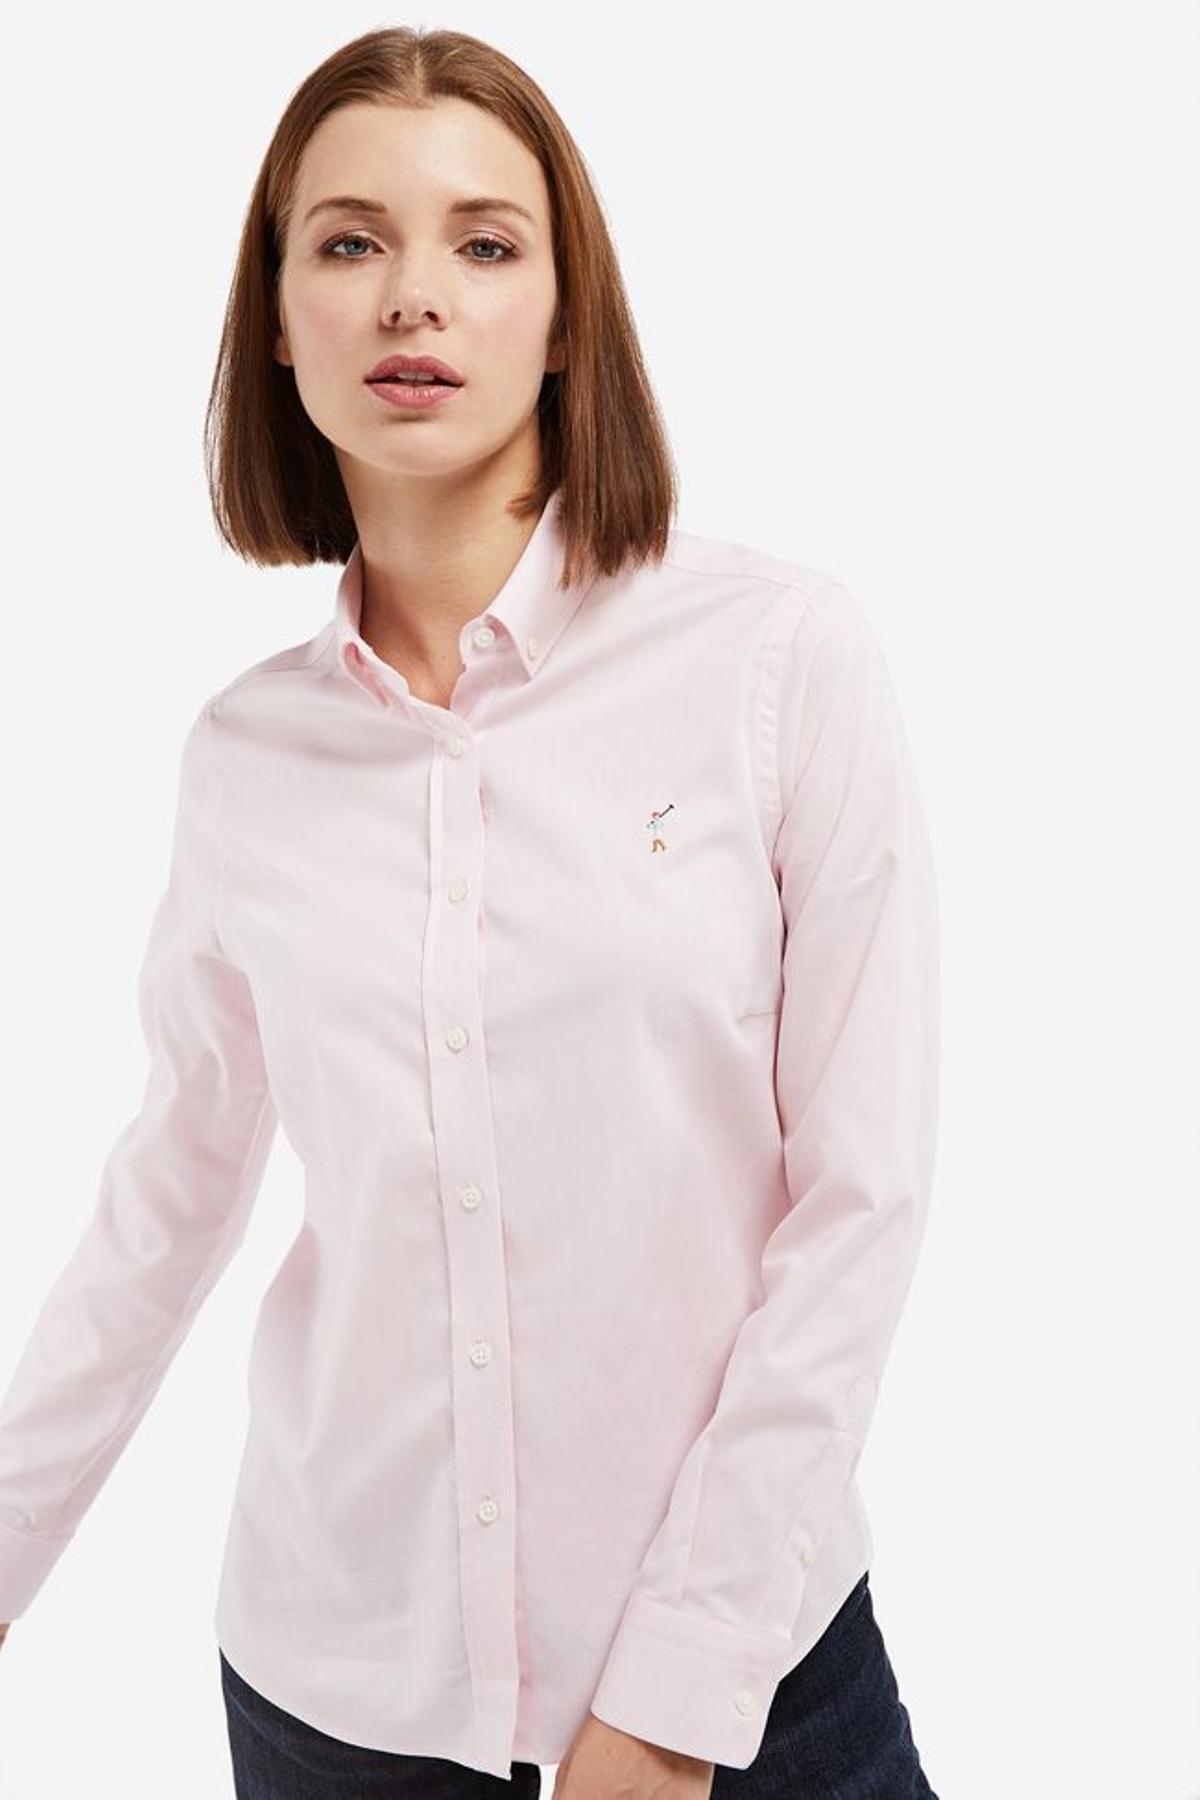 Camisa 'Miss Rigby Go Color Oxford' rosa, de Polo Club